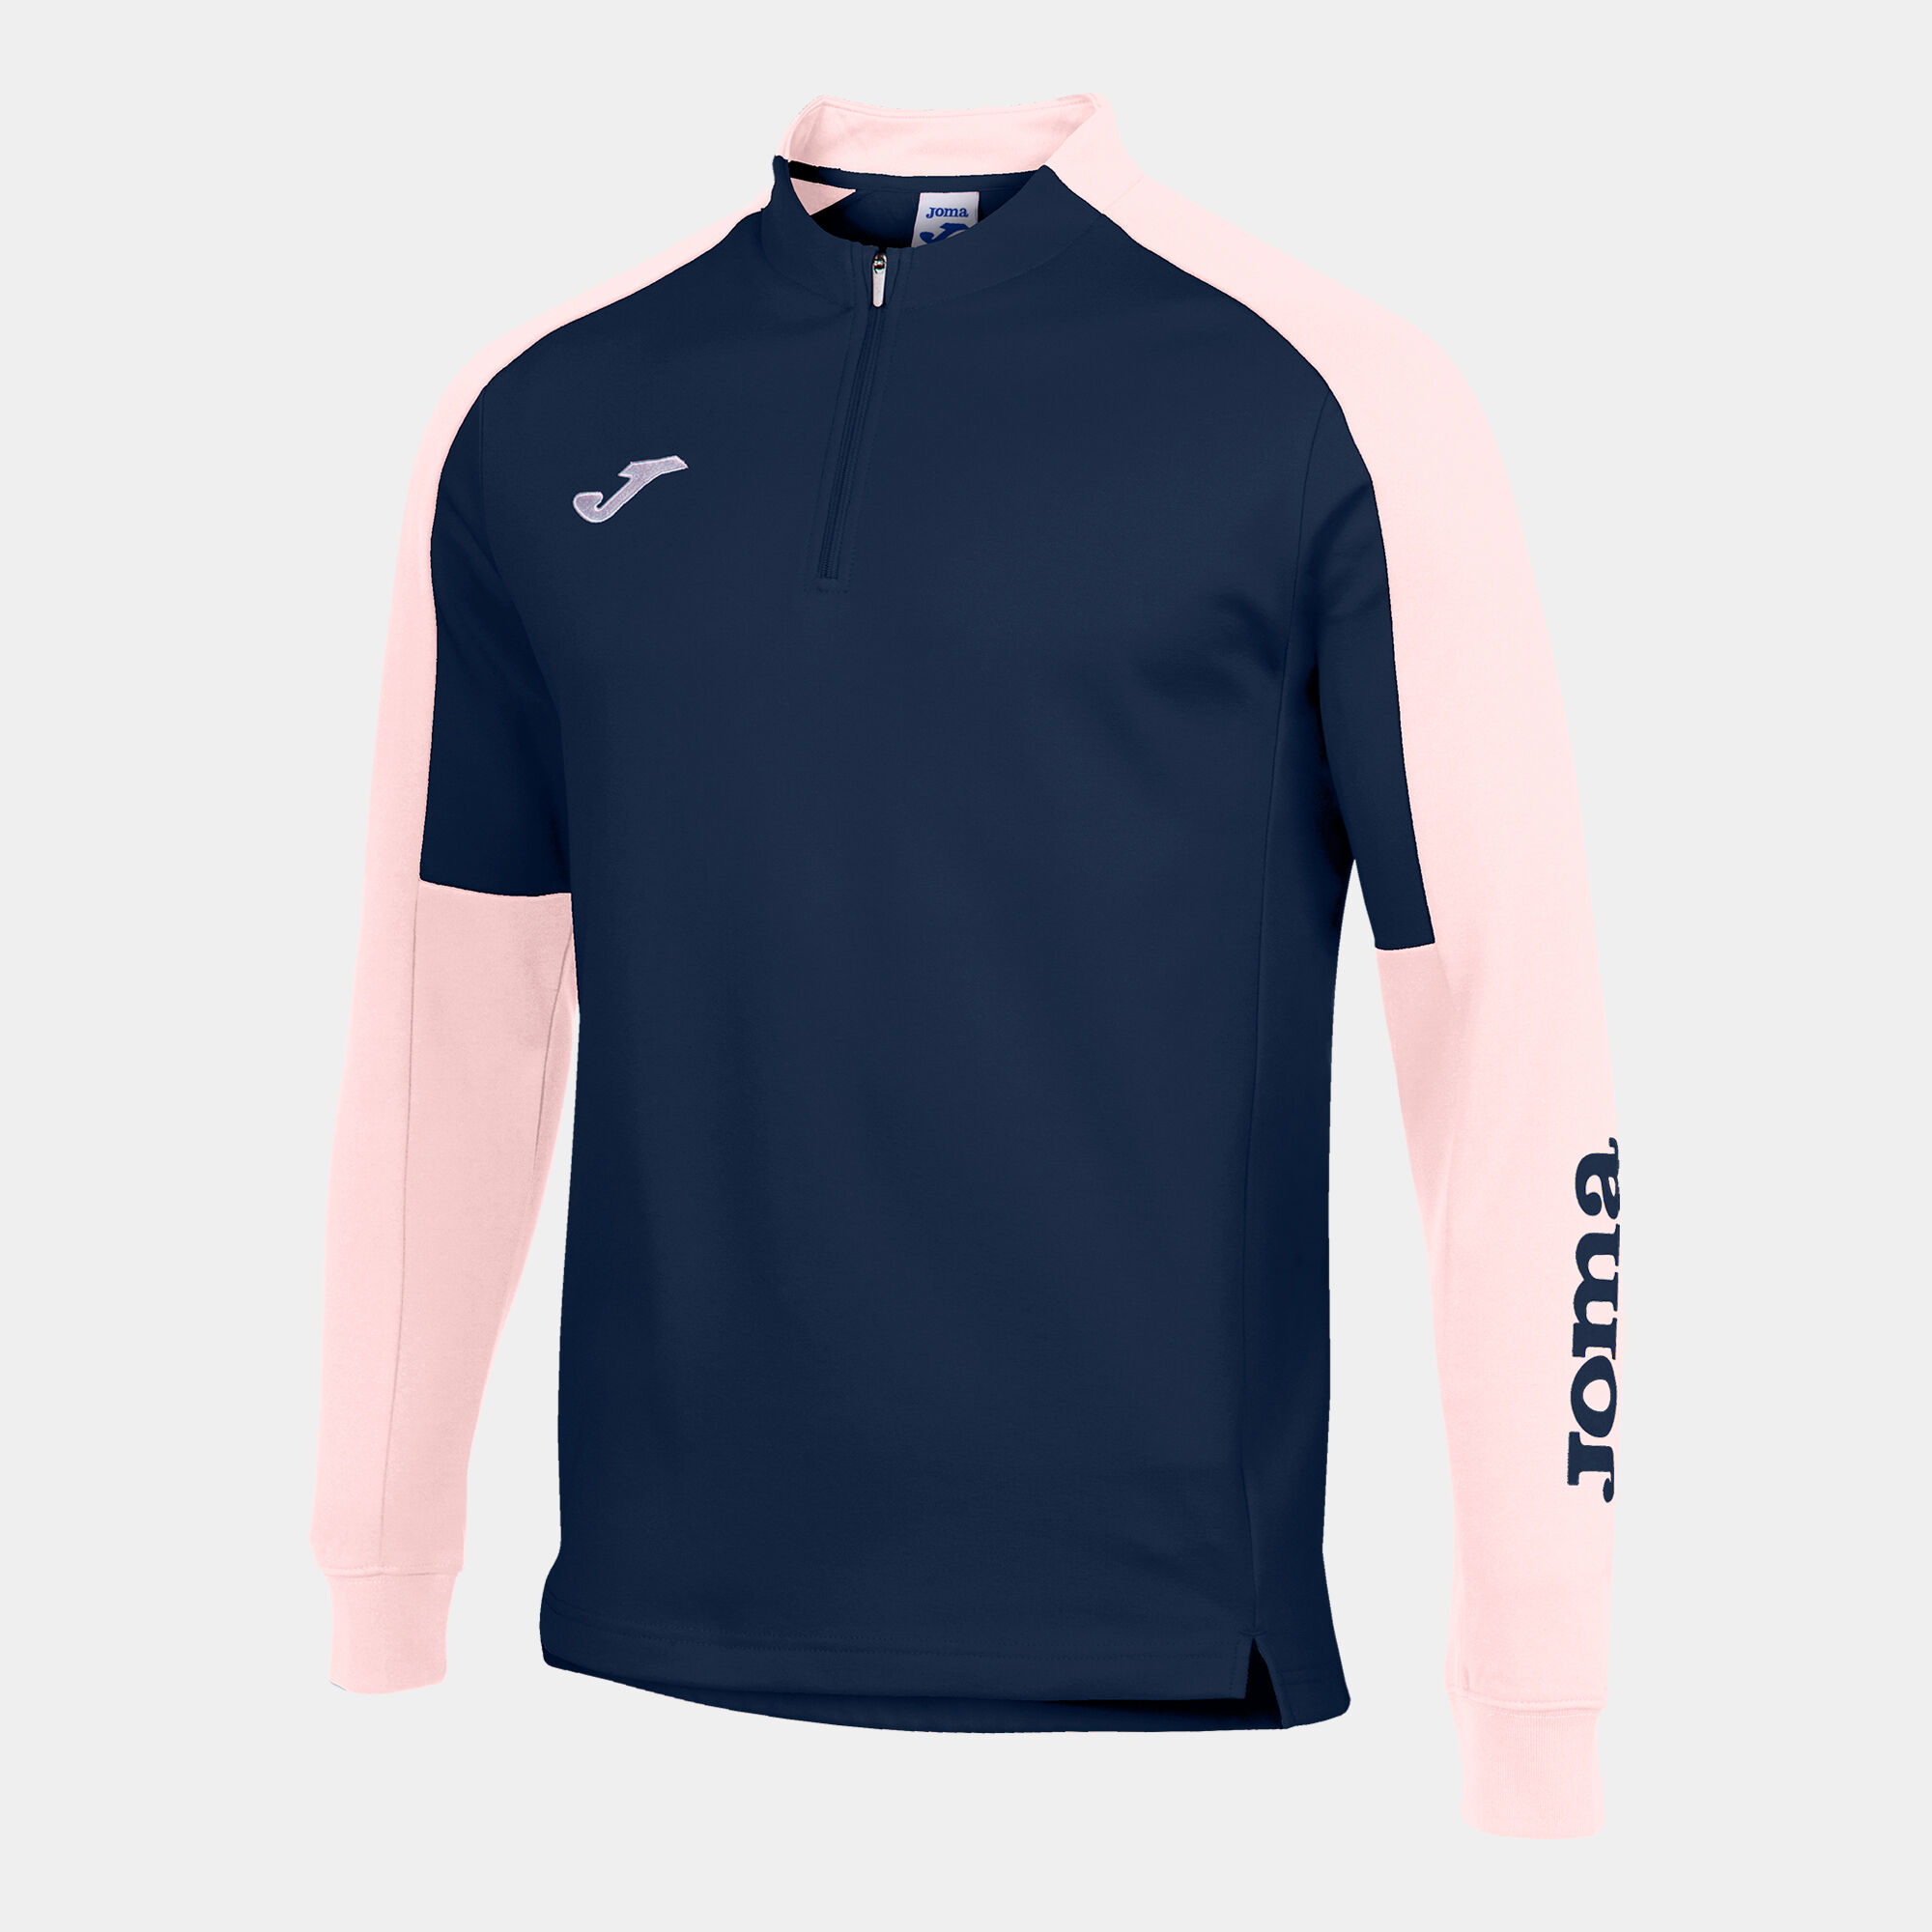 Sweat-shirt homme Eco Championship bleu marine rose